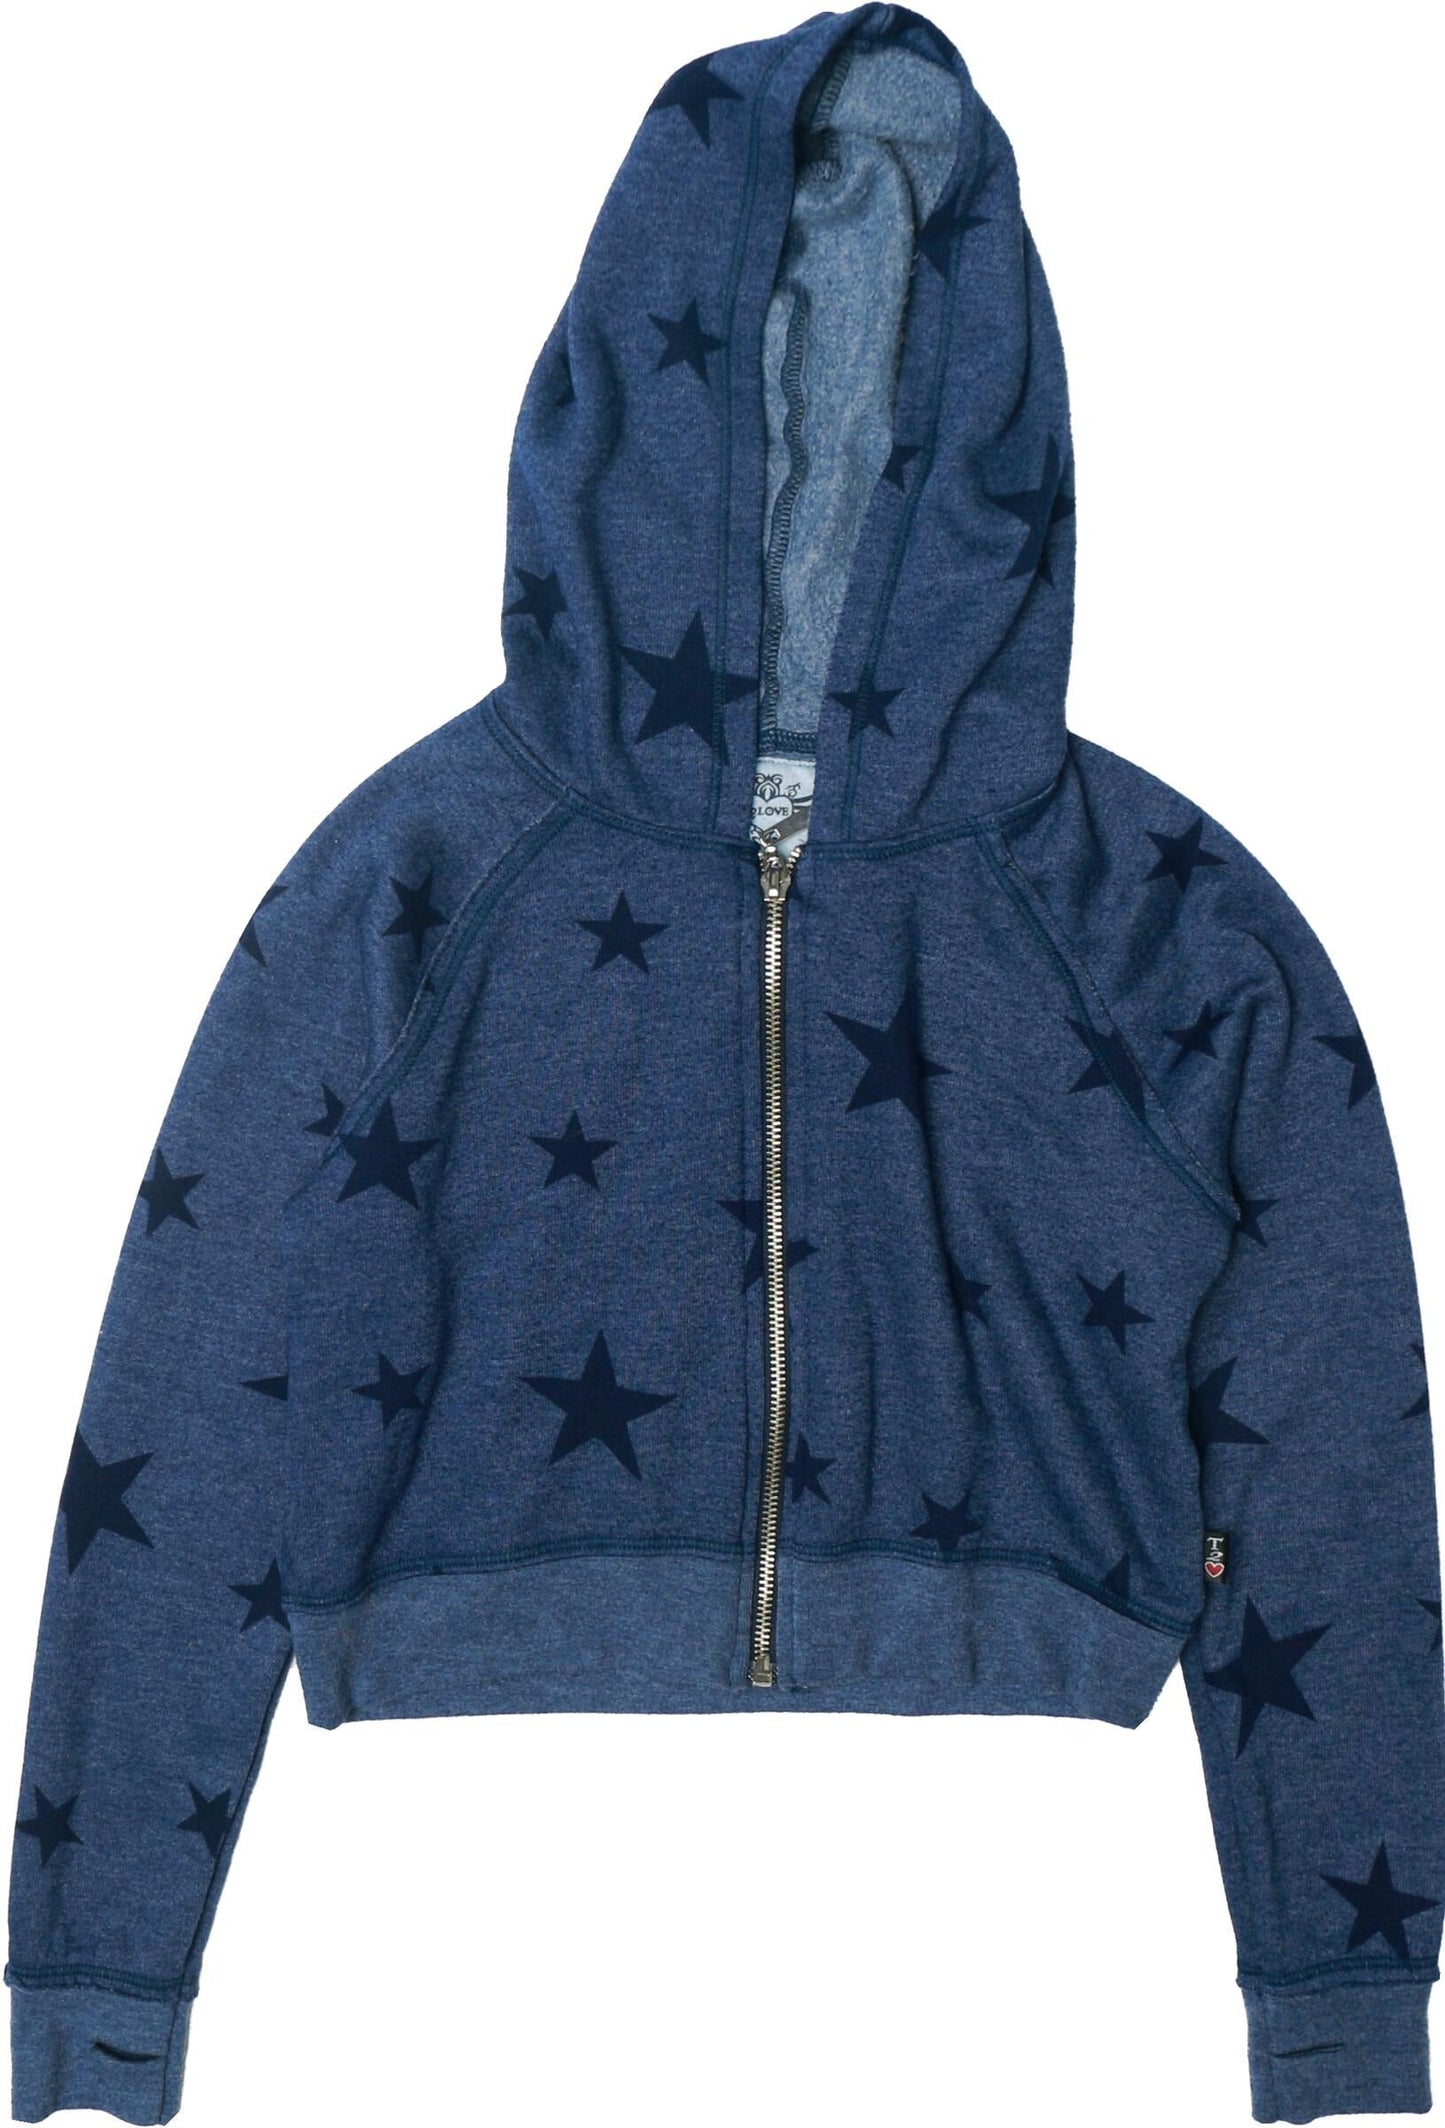 Charcoal Stars Signature Hooded Jacket with Thumbholes